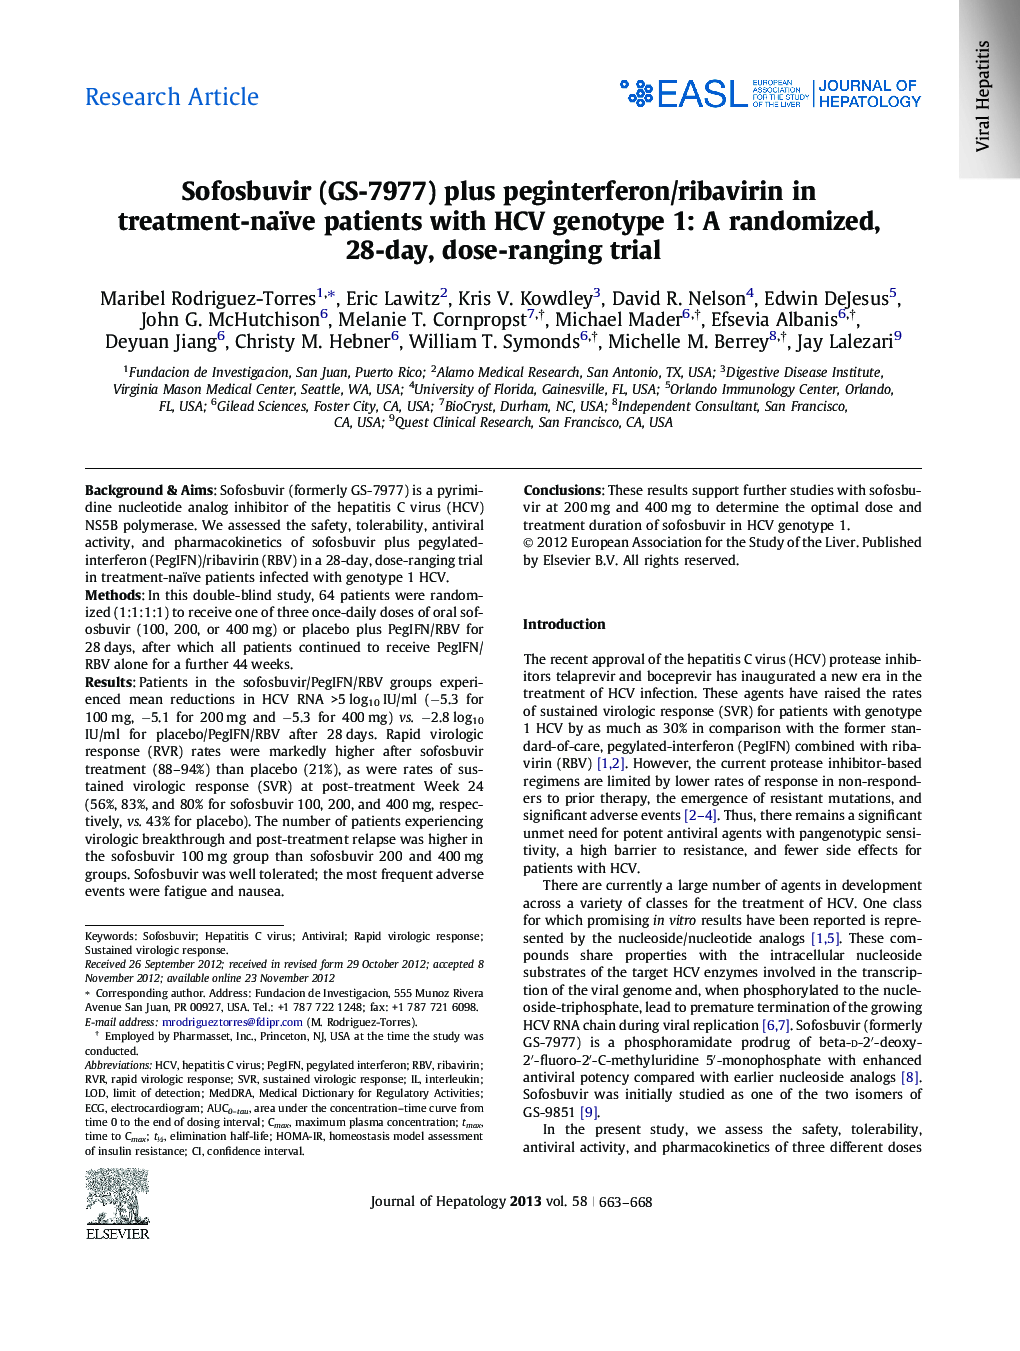 Sofosbuvir (GS-7977) plus peginterferon/ribavirin in treatment-naïve patients with HCV genotype 1: A randomized, 28-day, dose-ranging trial